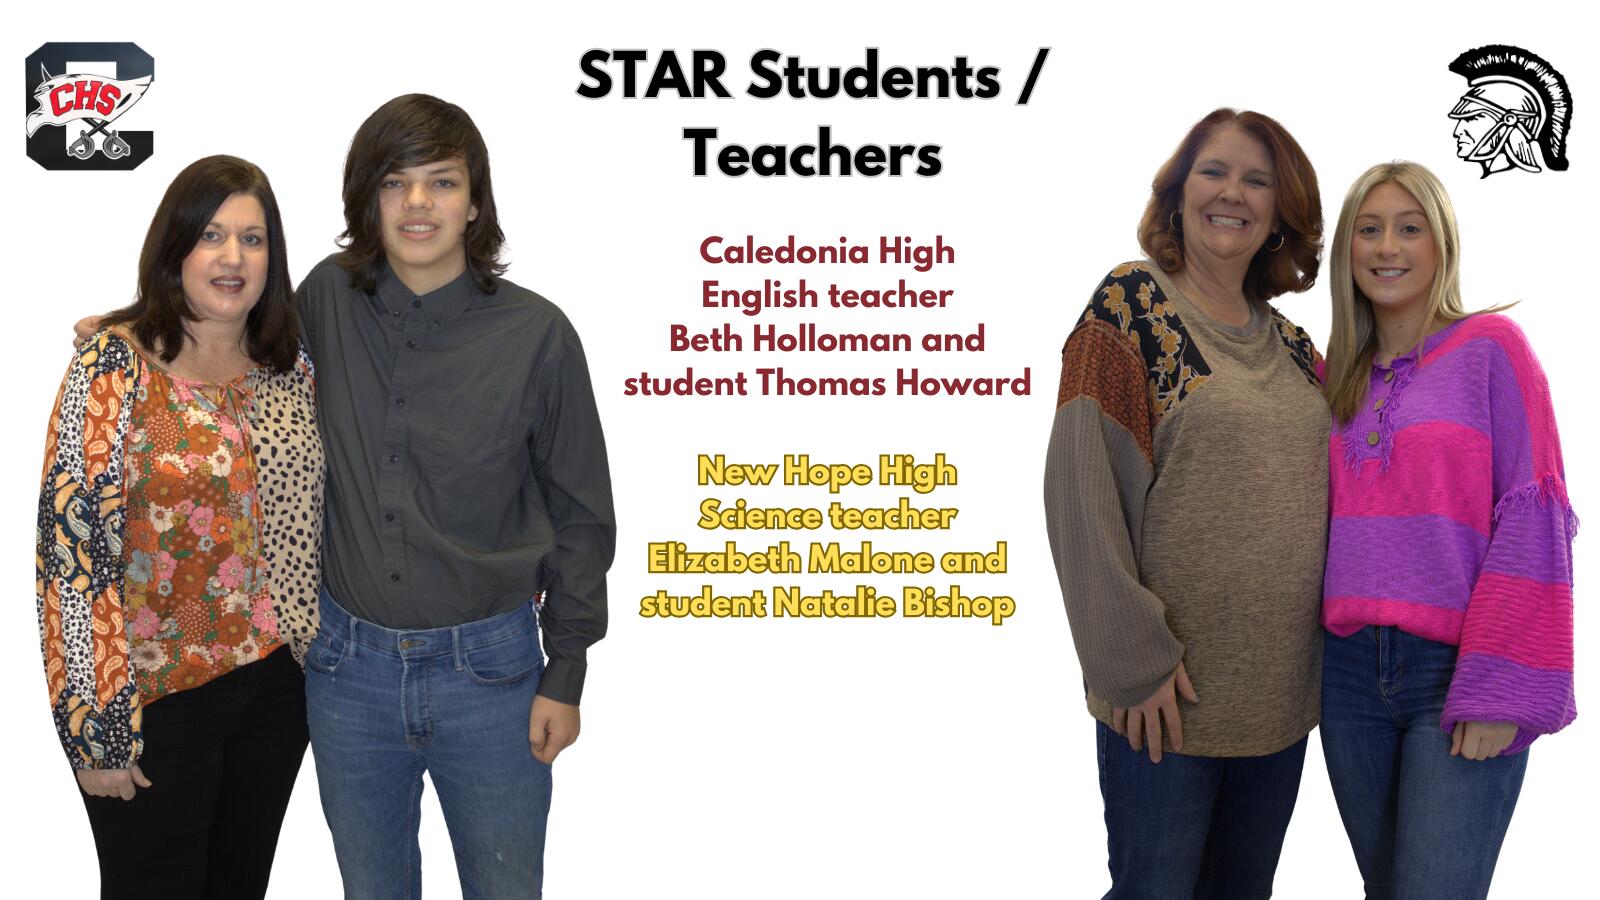 STAR Teachers / STAR students